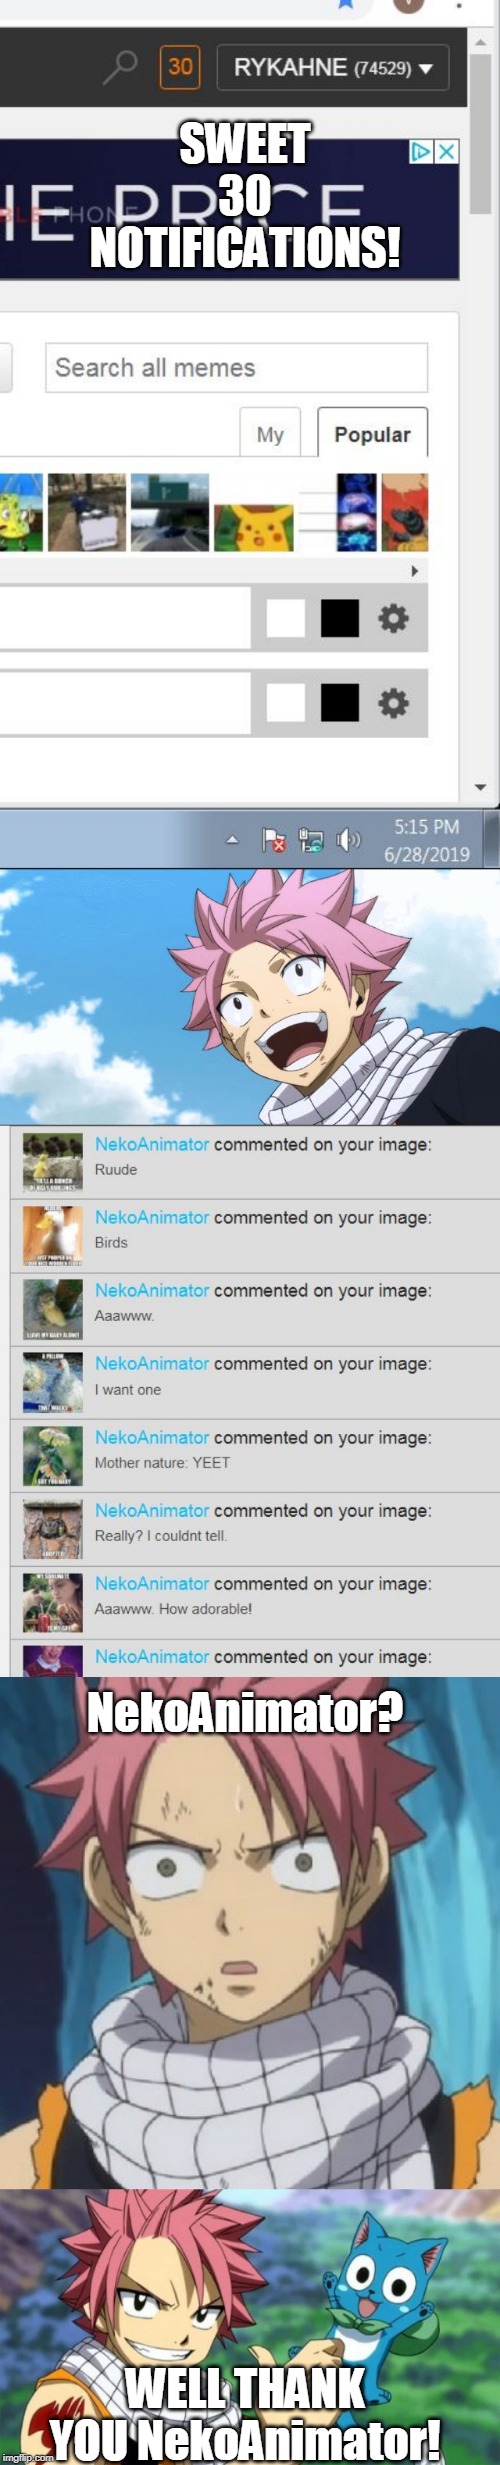 30! | SWEET 30 NOTIFICATIONS! NekoAnimator? WELL THANK YOU NekoAnimator! | image tagged in anime,notifications,fun,natsu fairytail | made w/ Imgflip meme maker